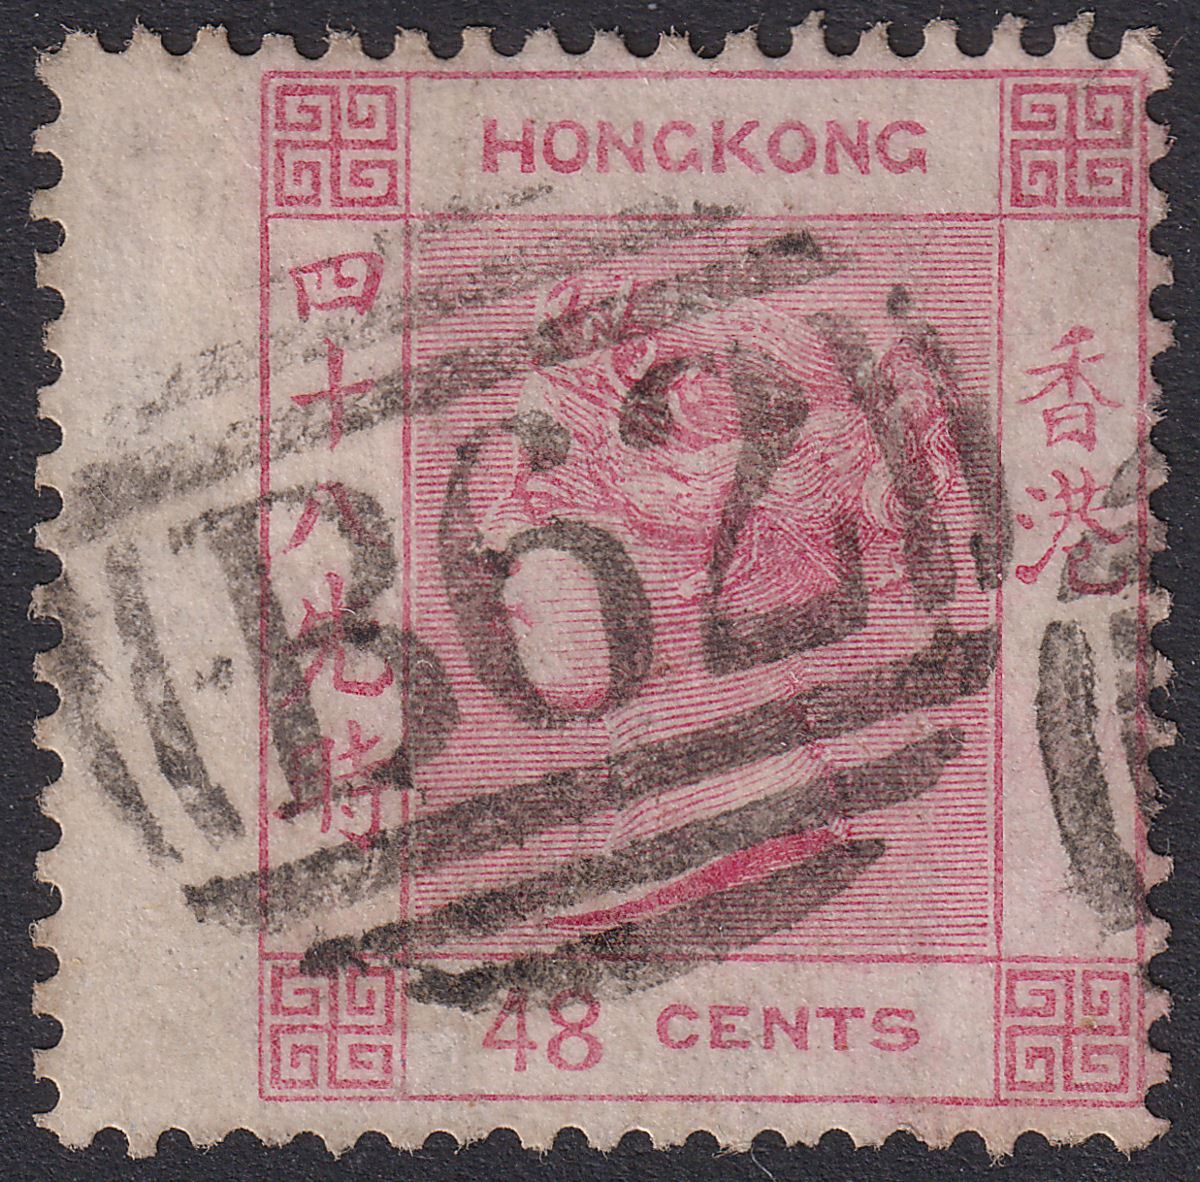 Hong Kong 1865 QV 48c Rose-Carmine Used SG17a cat £38 wing margin